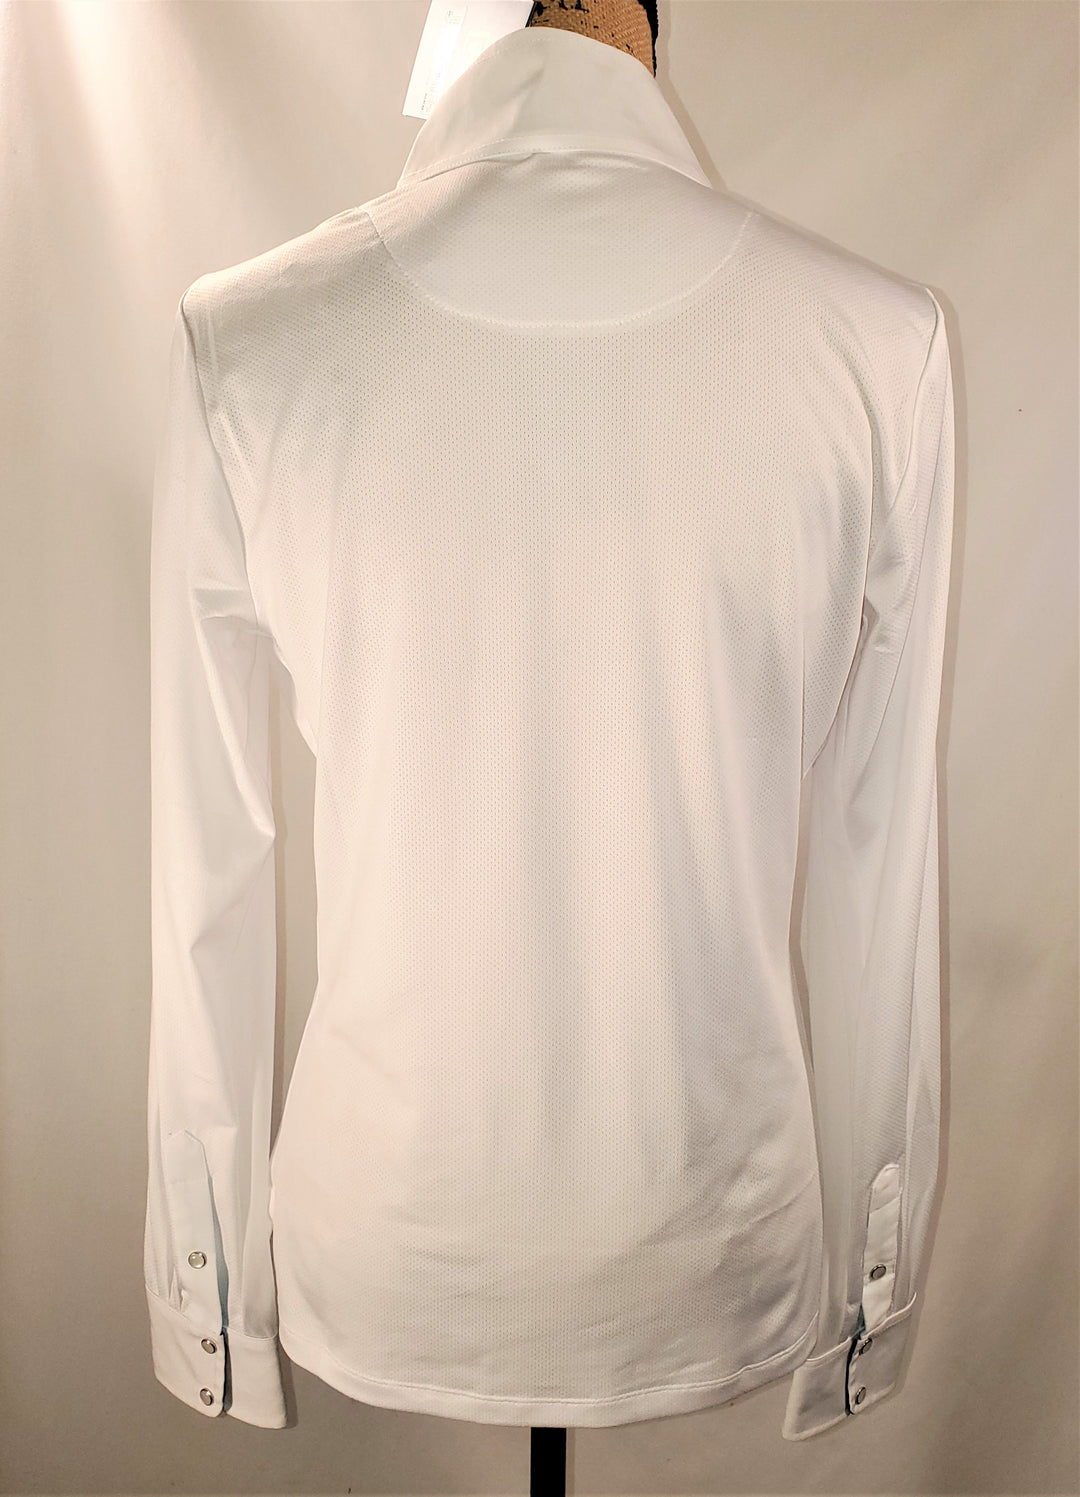 Romfh Lindsay Ladies Long Sleeve Show Shirt - New! - The Show Trunk Shop